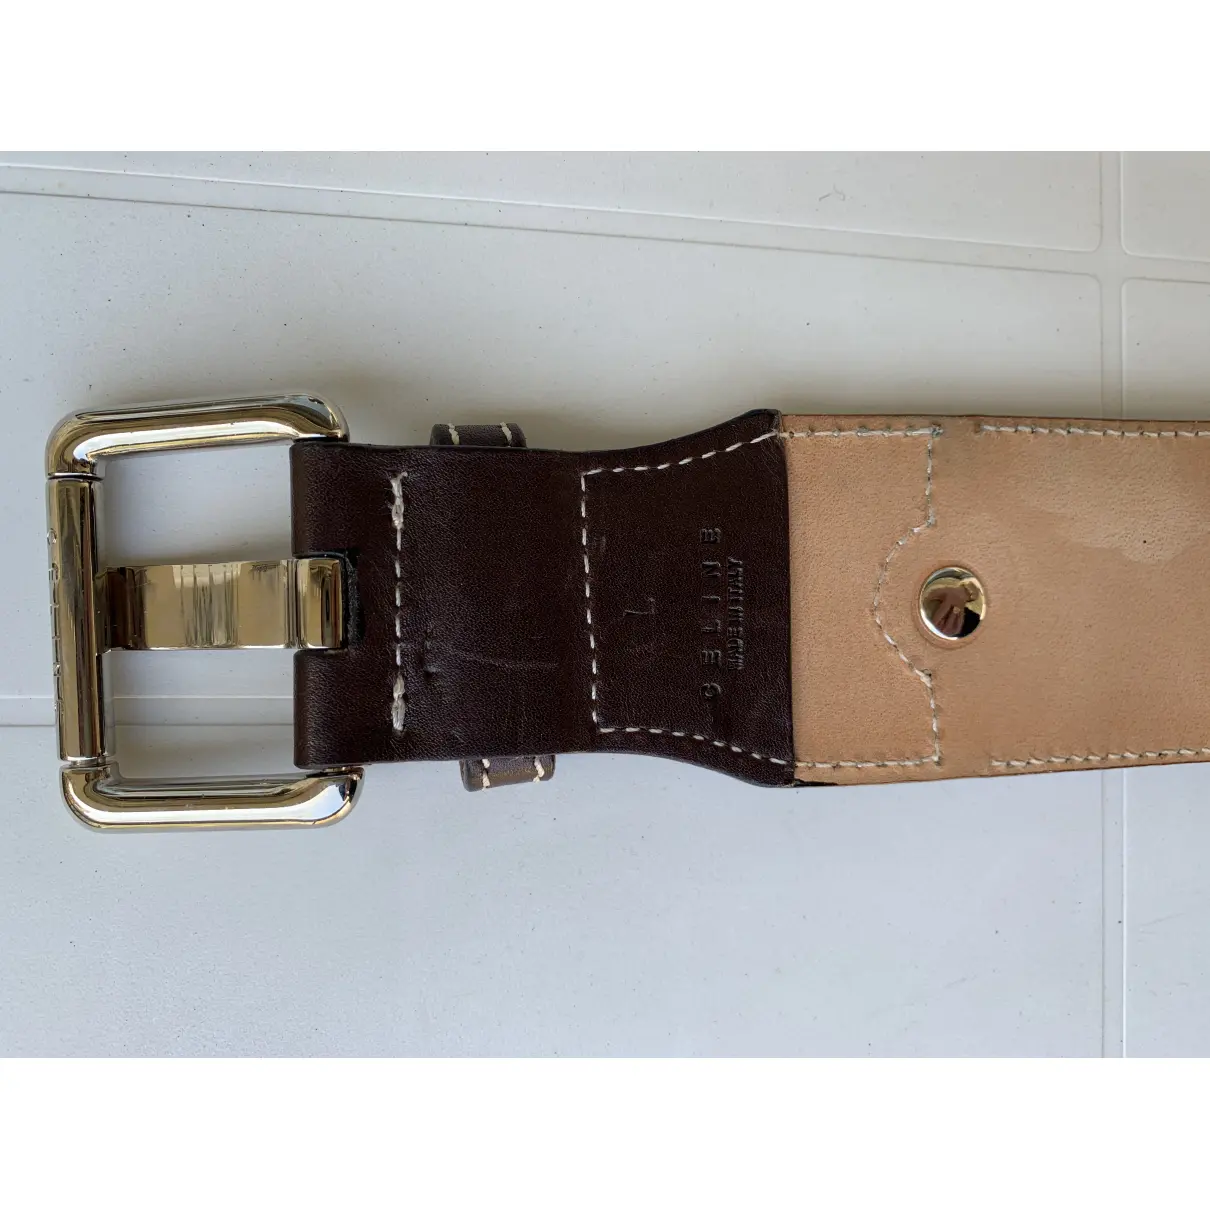 Leather belt Celine